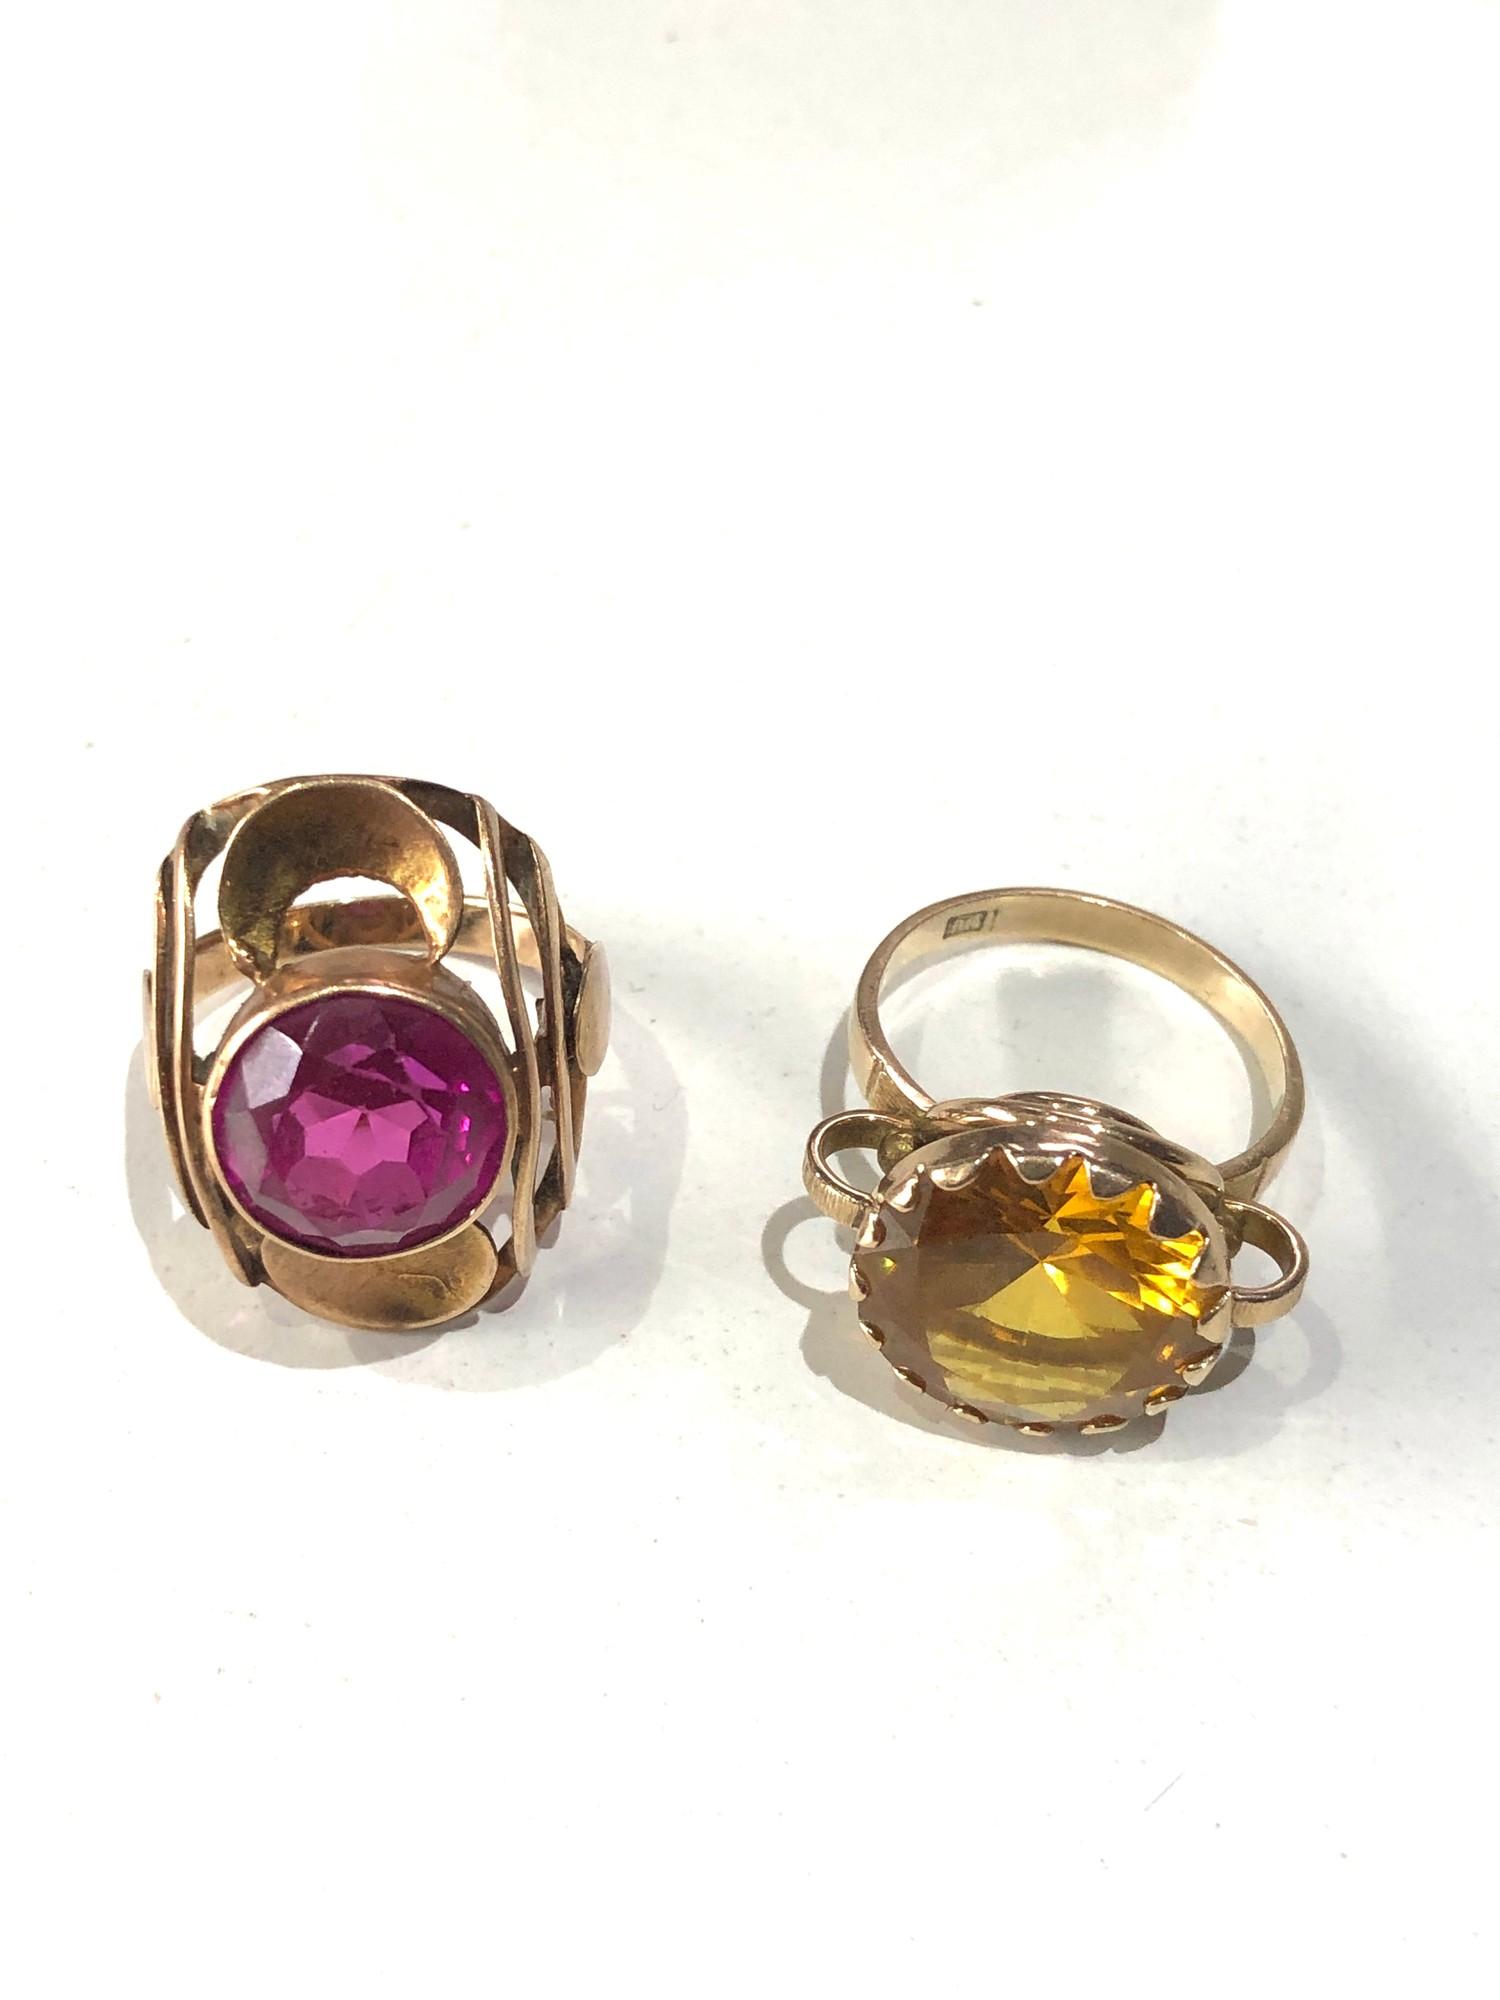 2 vintage 10ct gold gem set rings weight 10.6g - Image 3 of 5